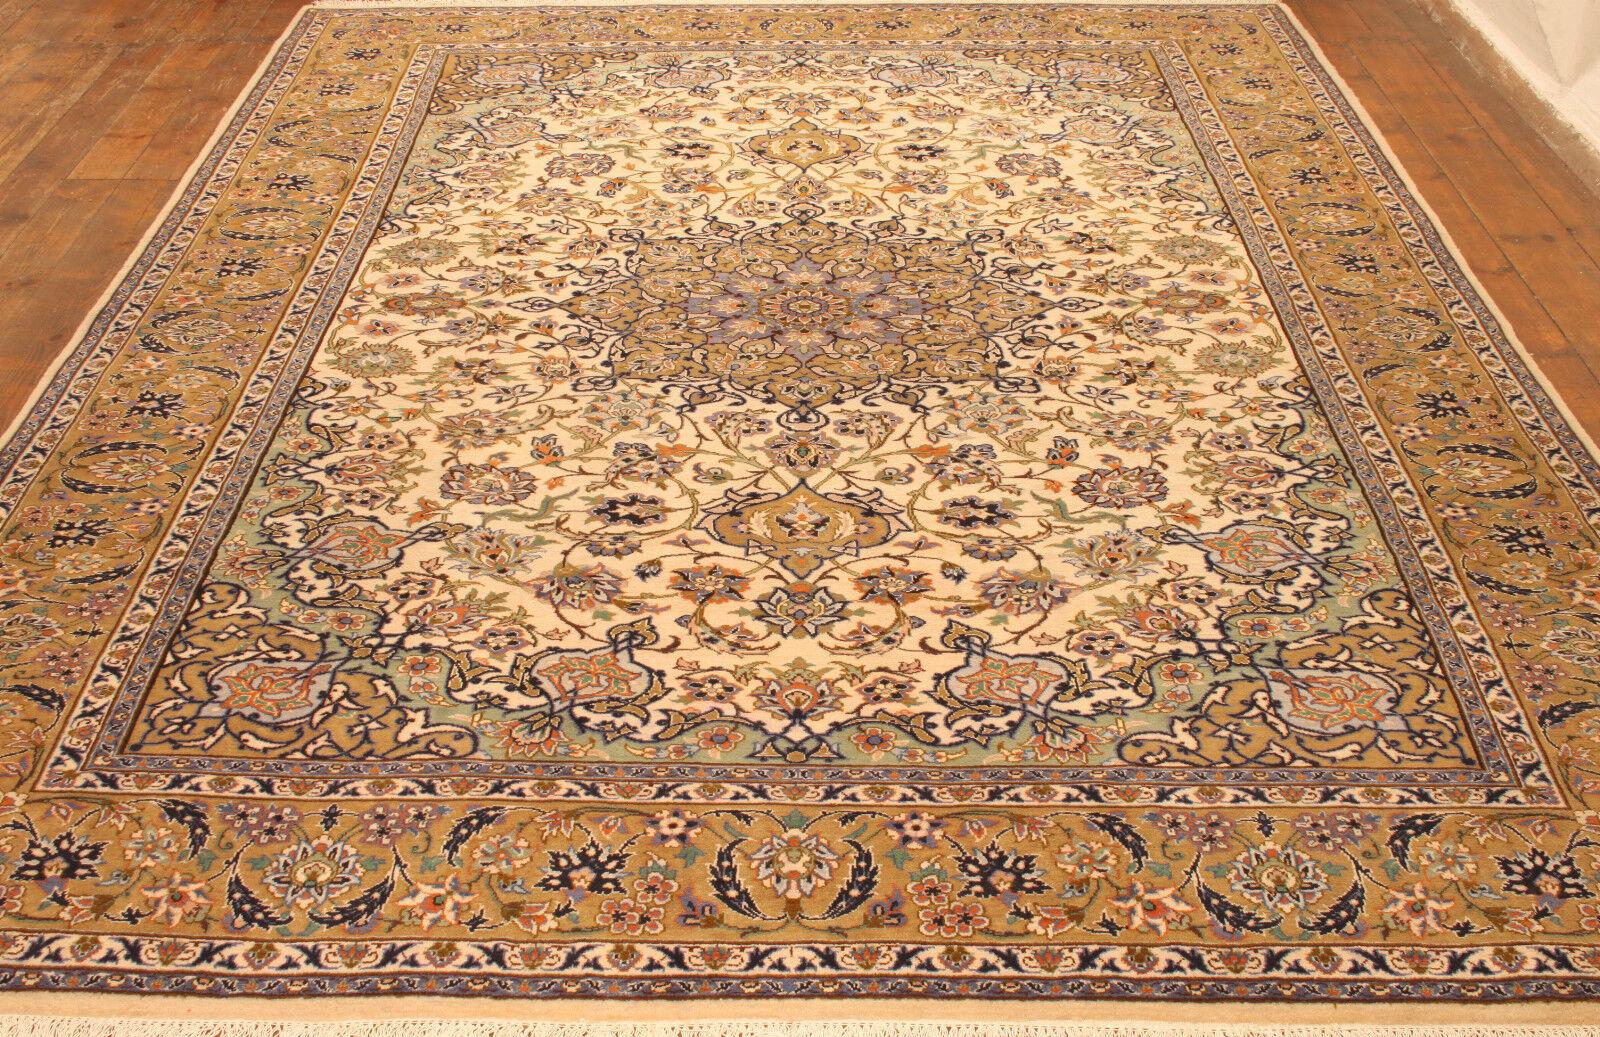 Handmade Contemporary Isfahan Rug 9.6' x 12.7' (295cm x 390cm), 2000s - 1T02 For Sale 2